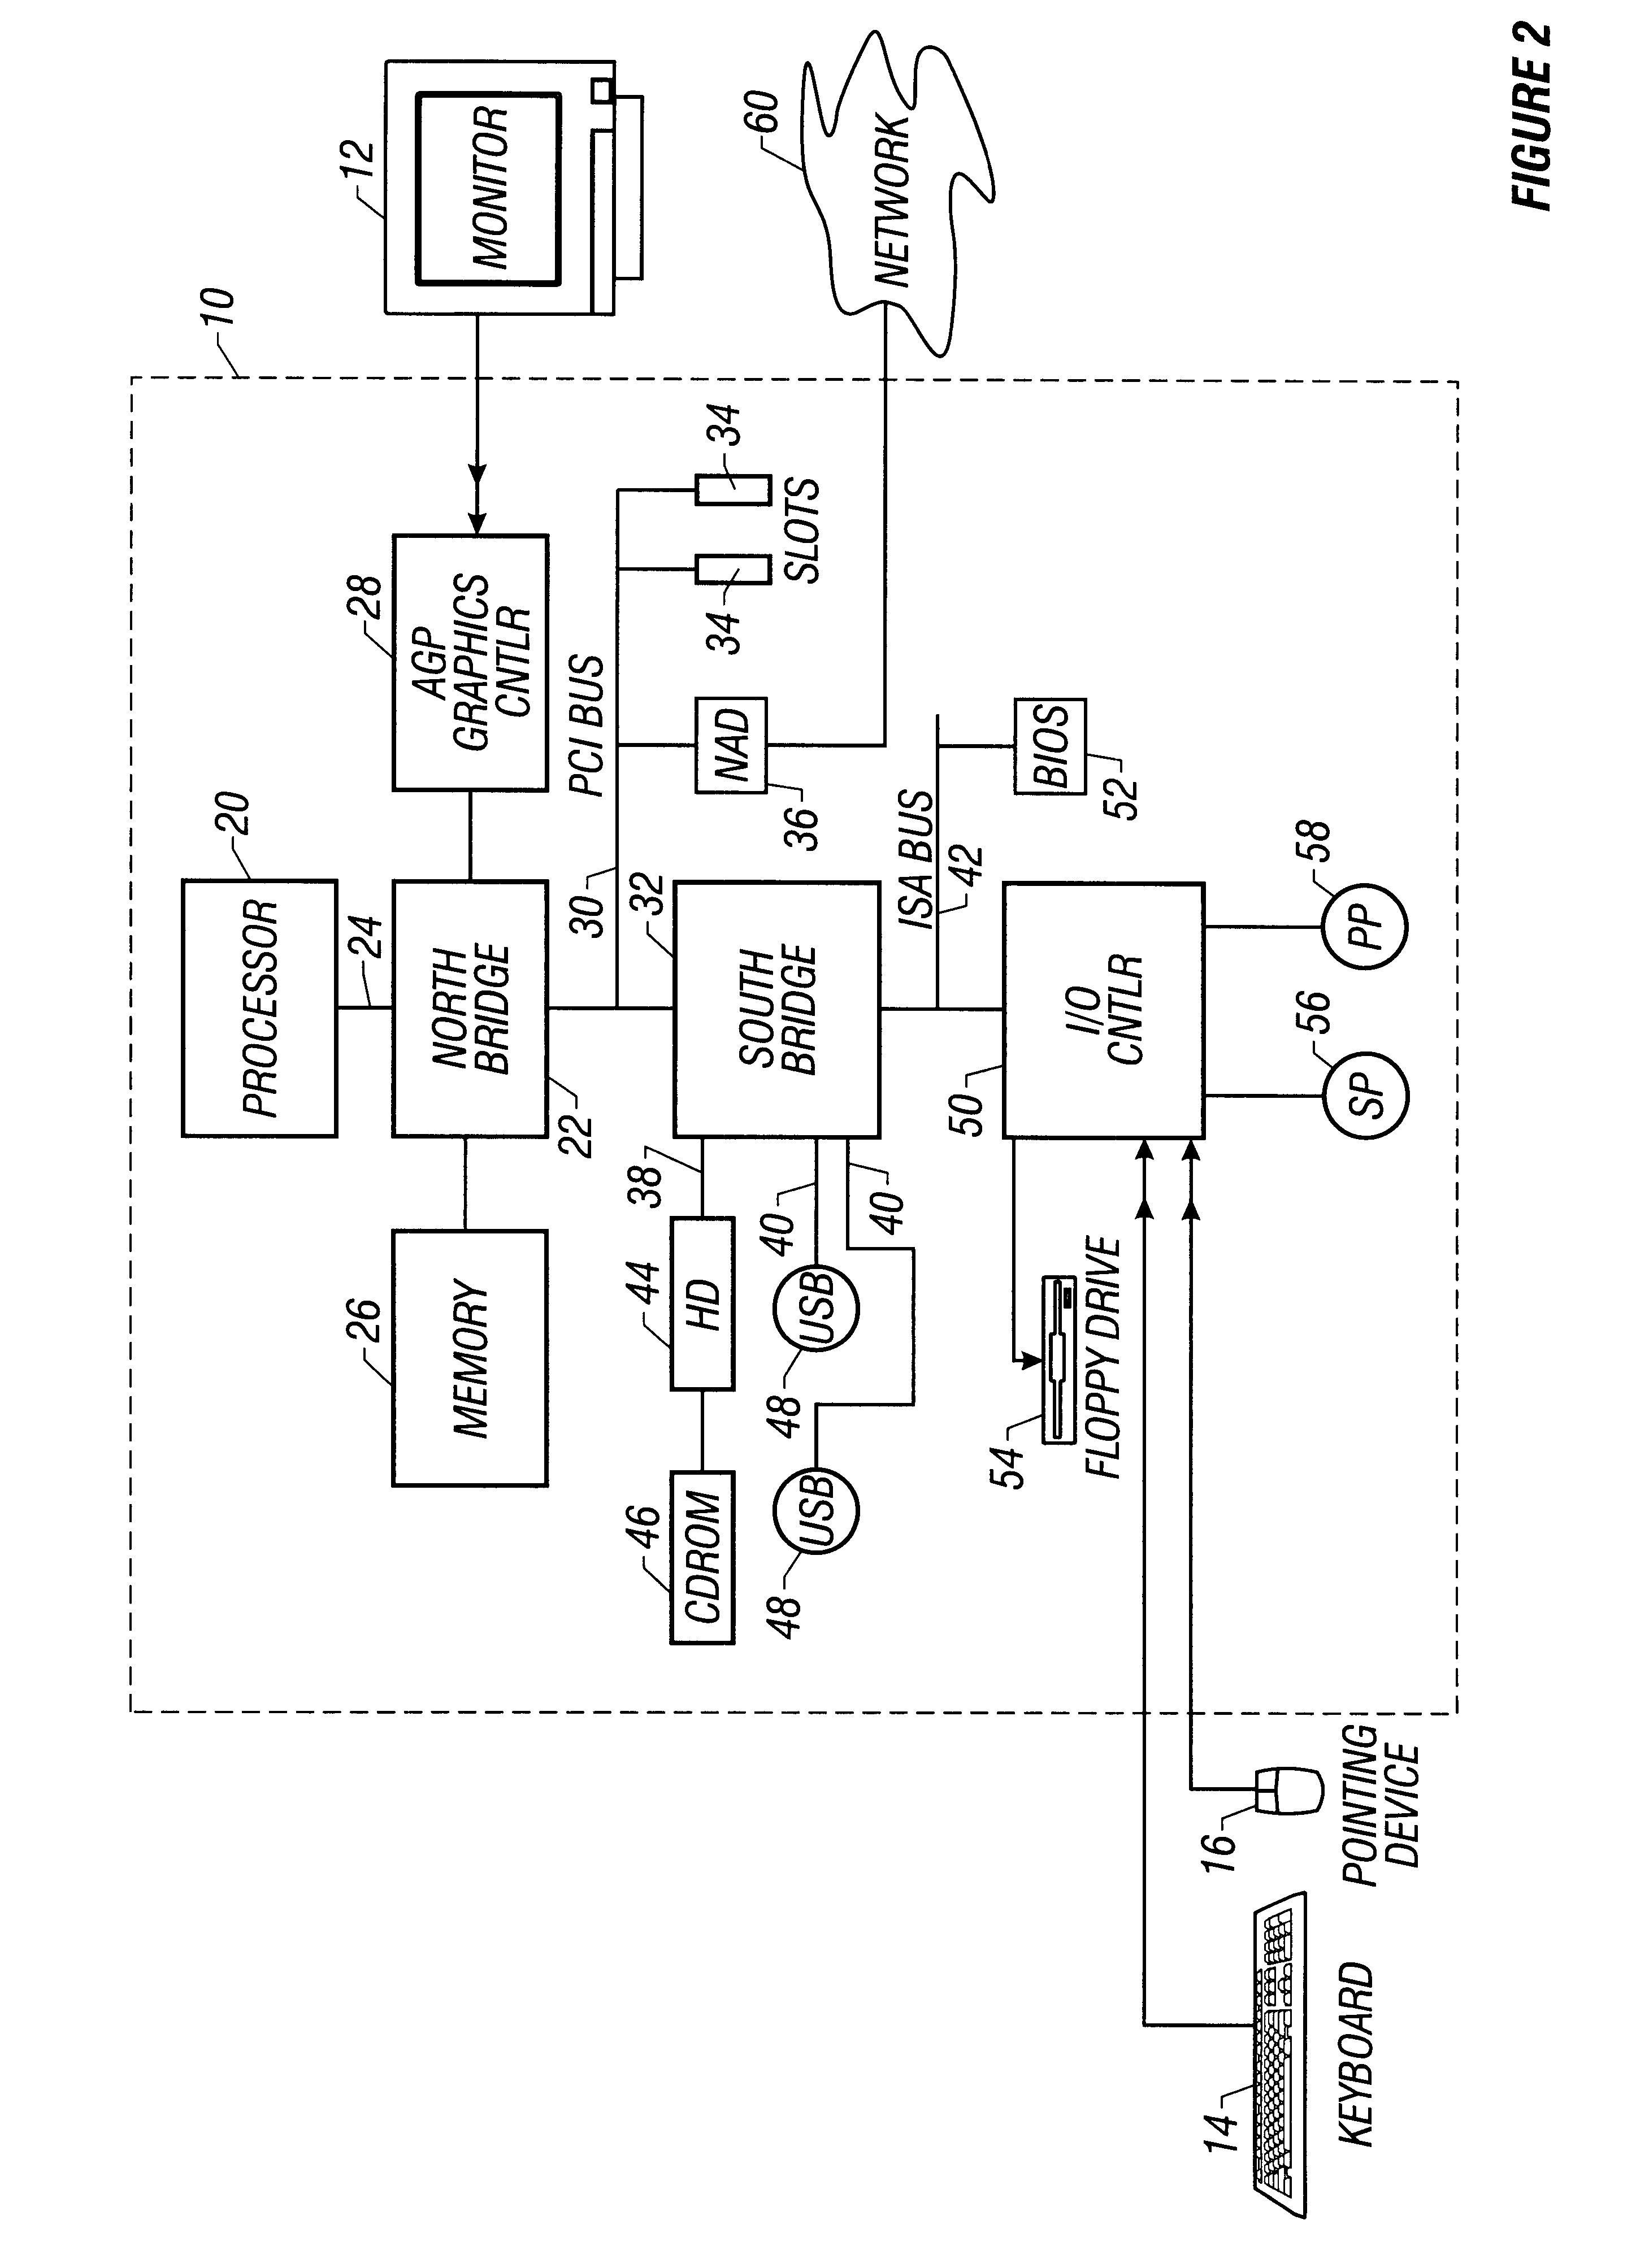 Method and apparatus for an ACPI compliant keyboard sleep key